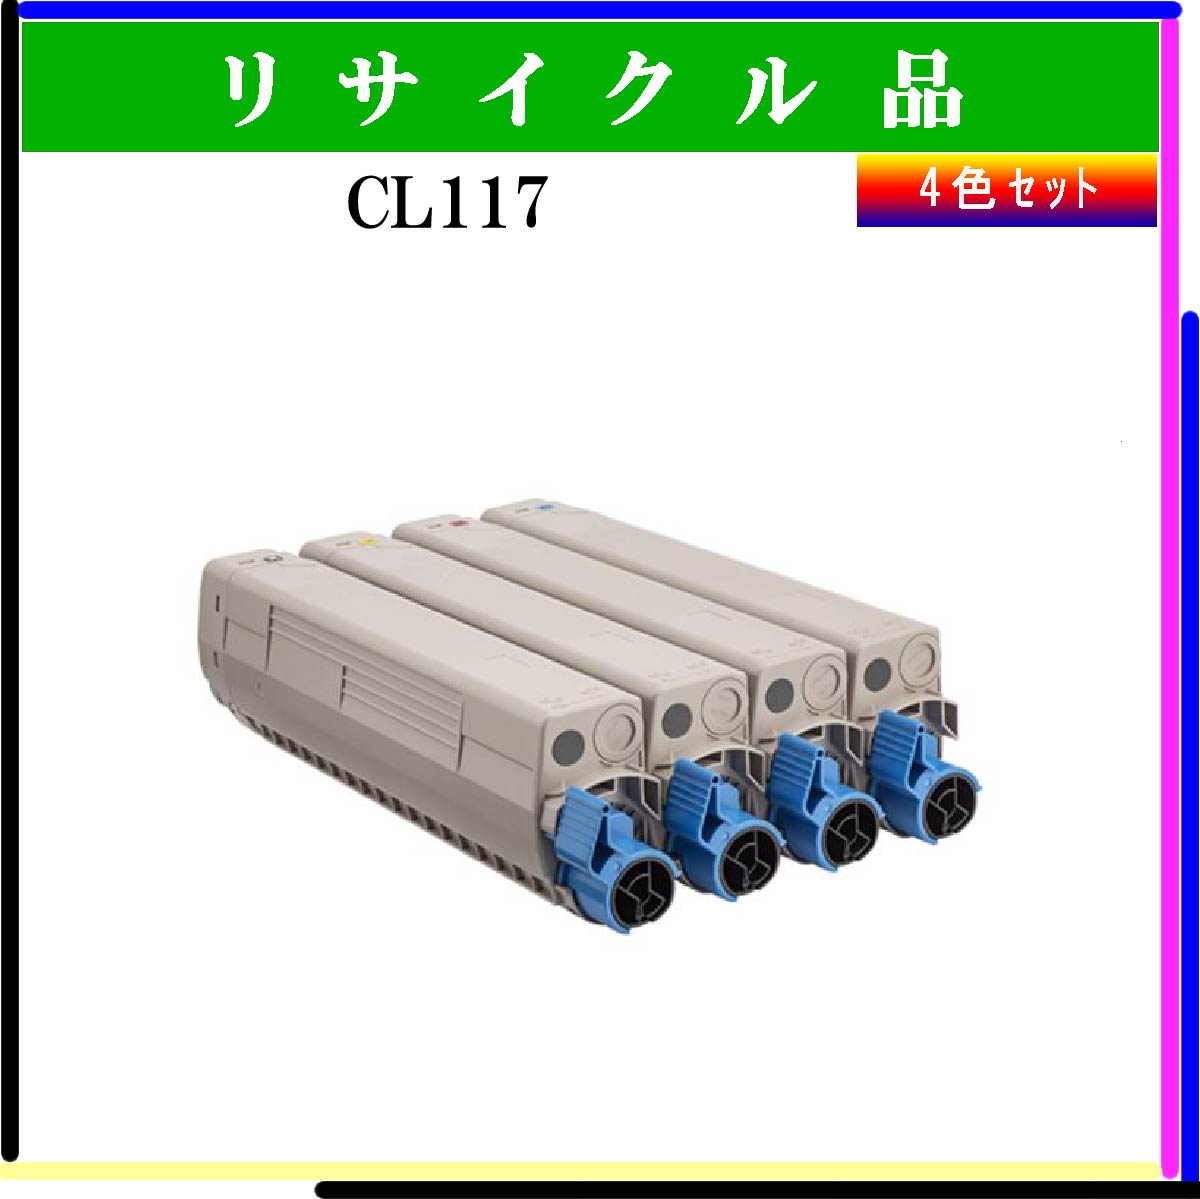 CL117 (4色ｾｯﾄ)